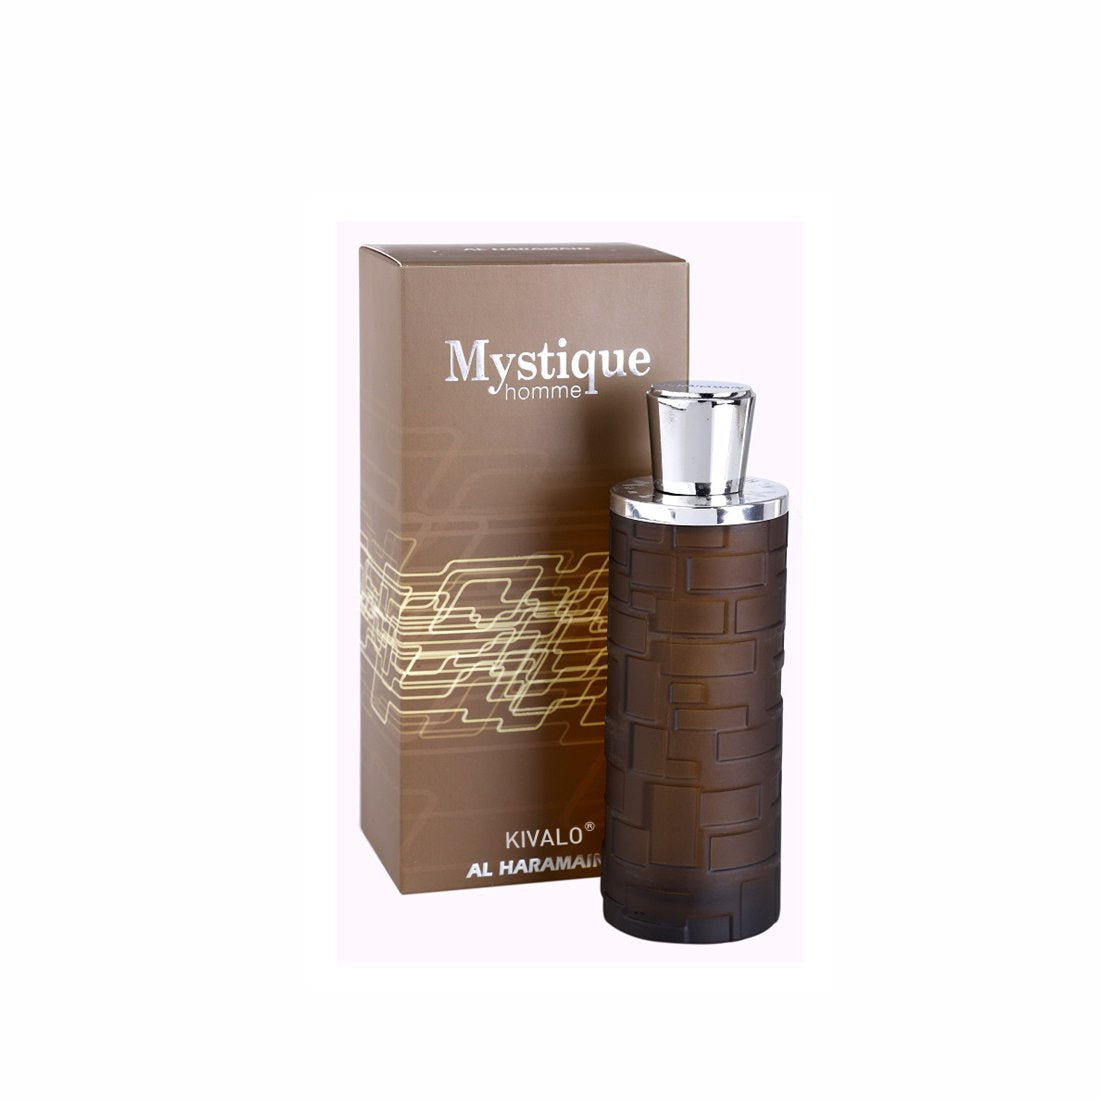 Al Haramain Mystique Homme Perfume Spray - 100 ml